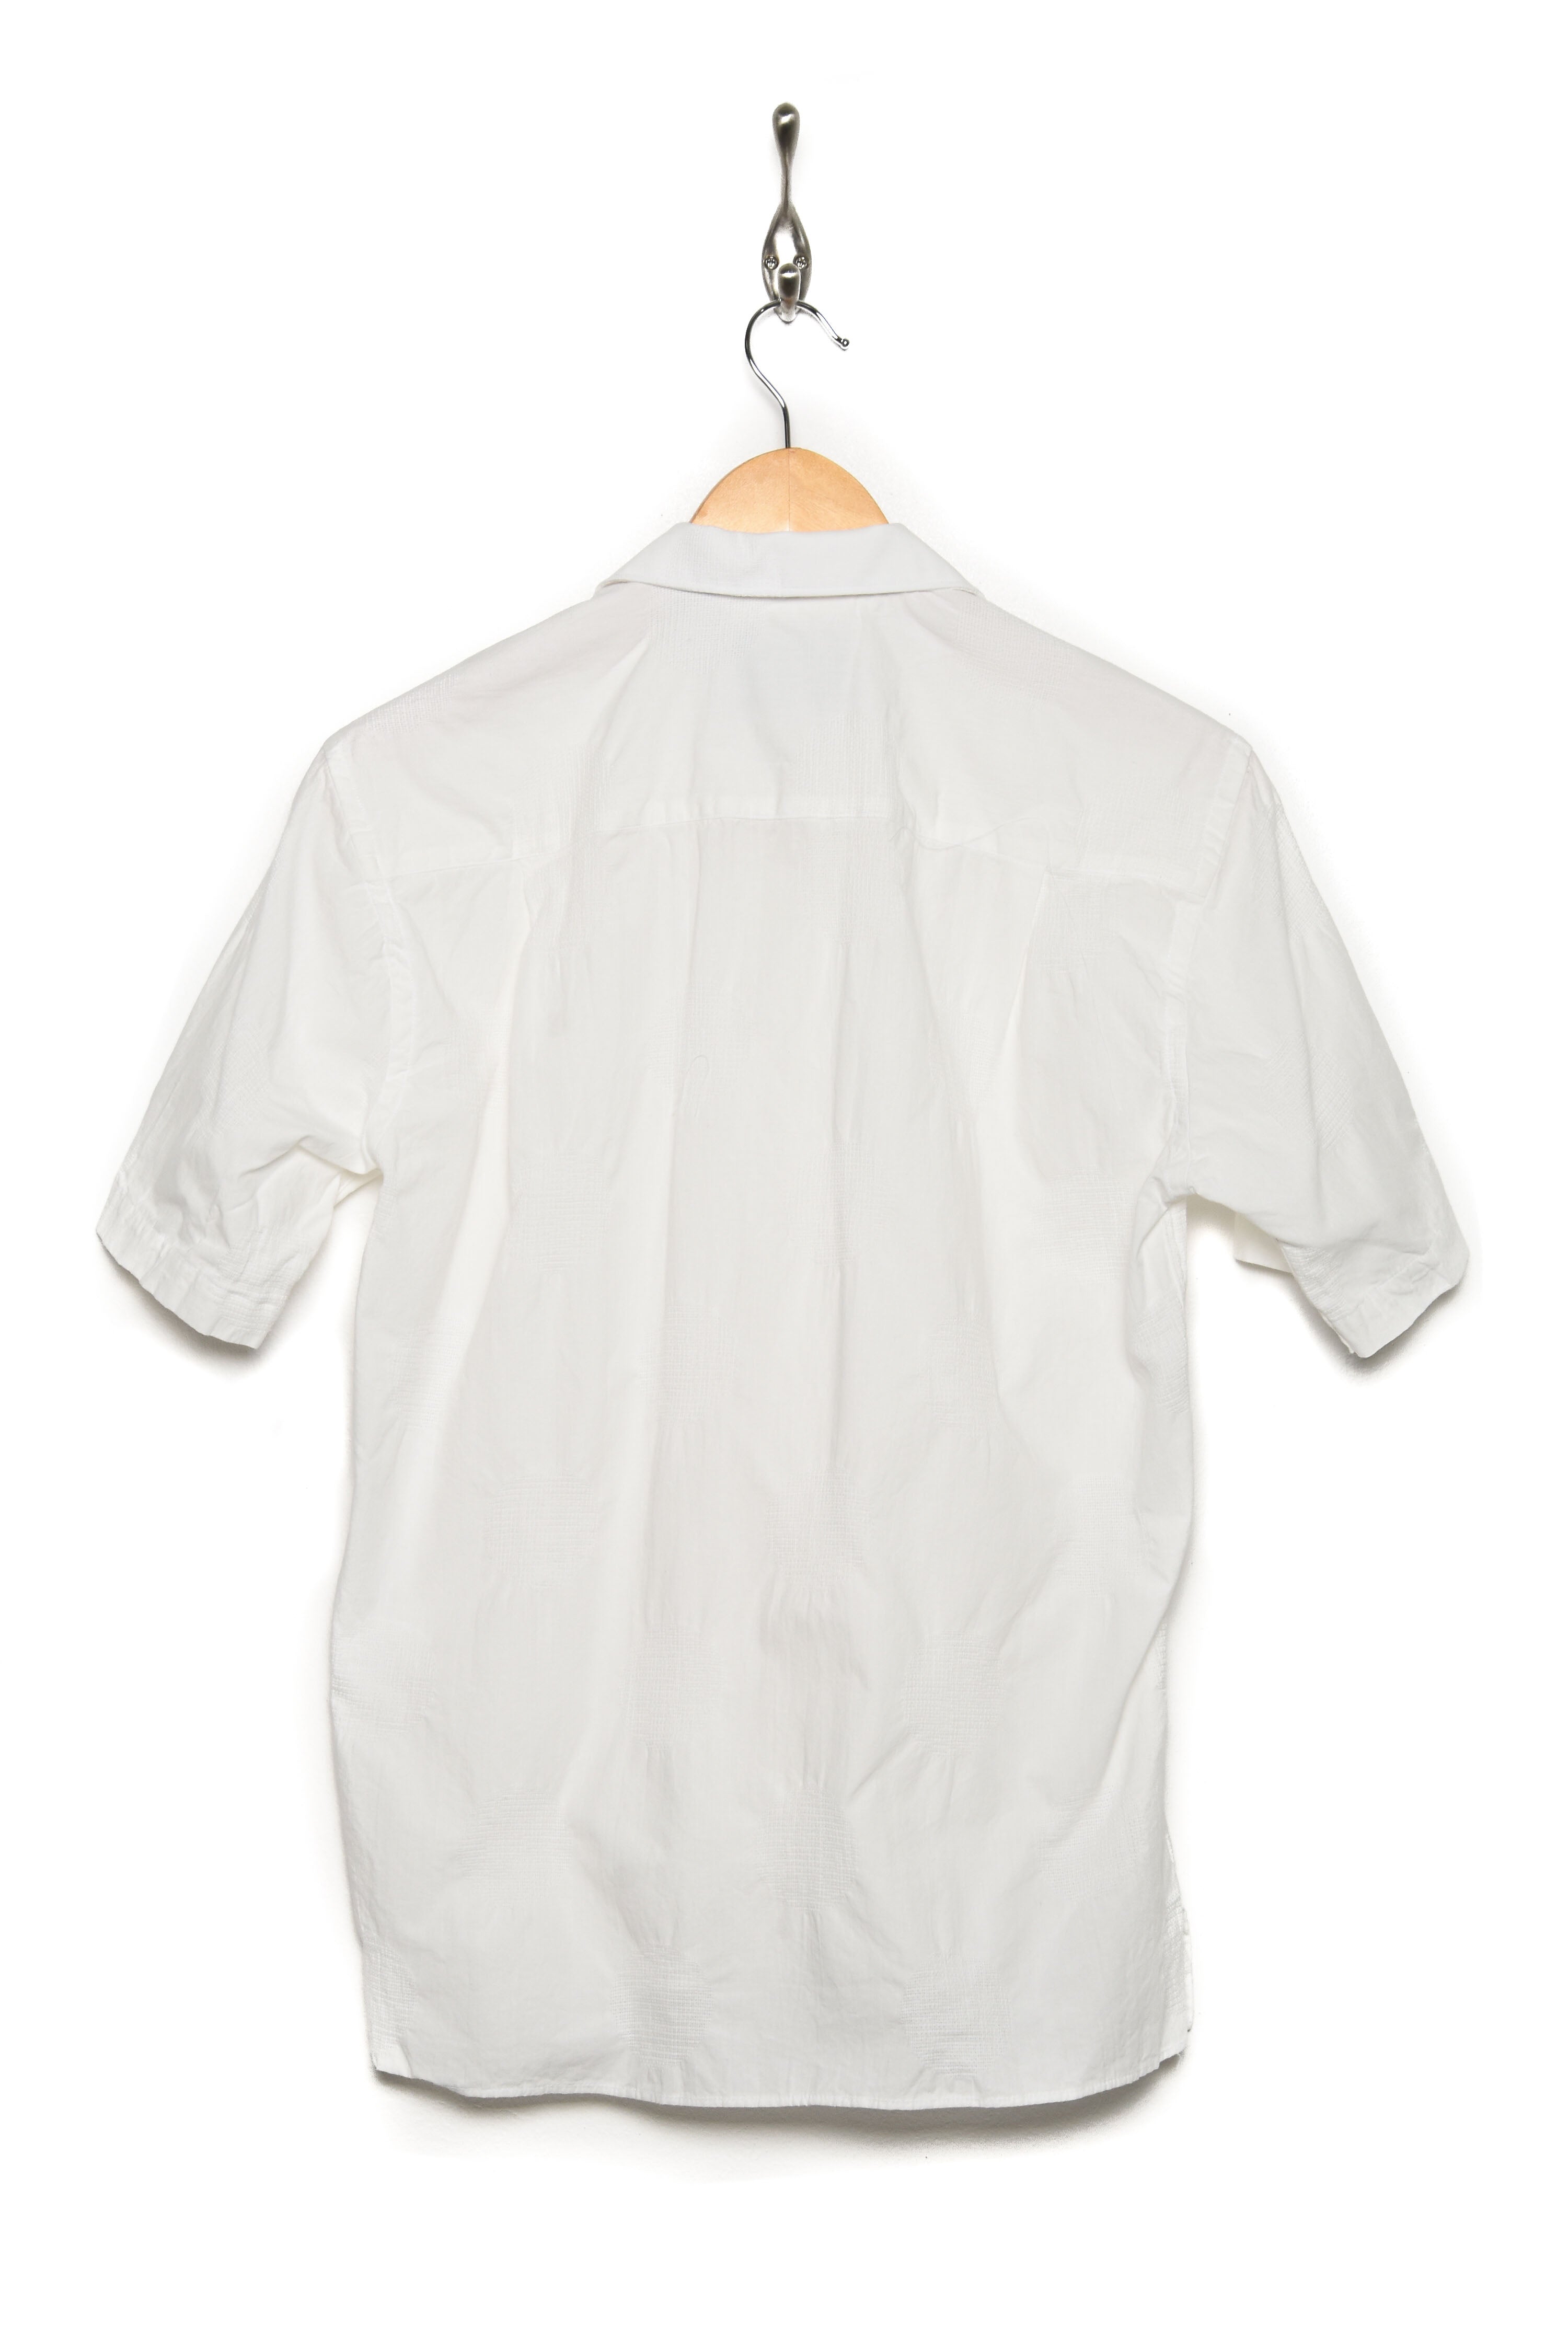 Gitman Brothers Vintage Camp Shirt weiss jacquard dots